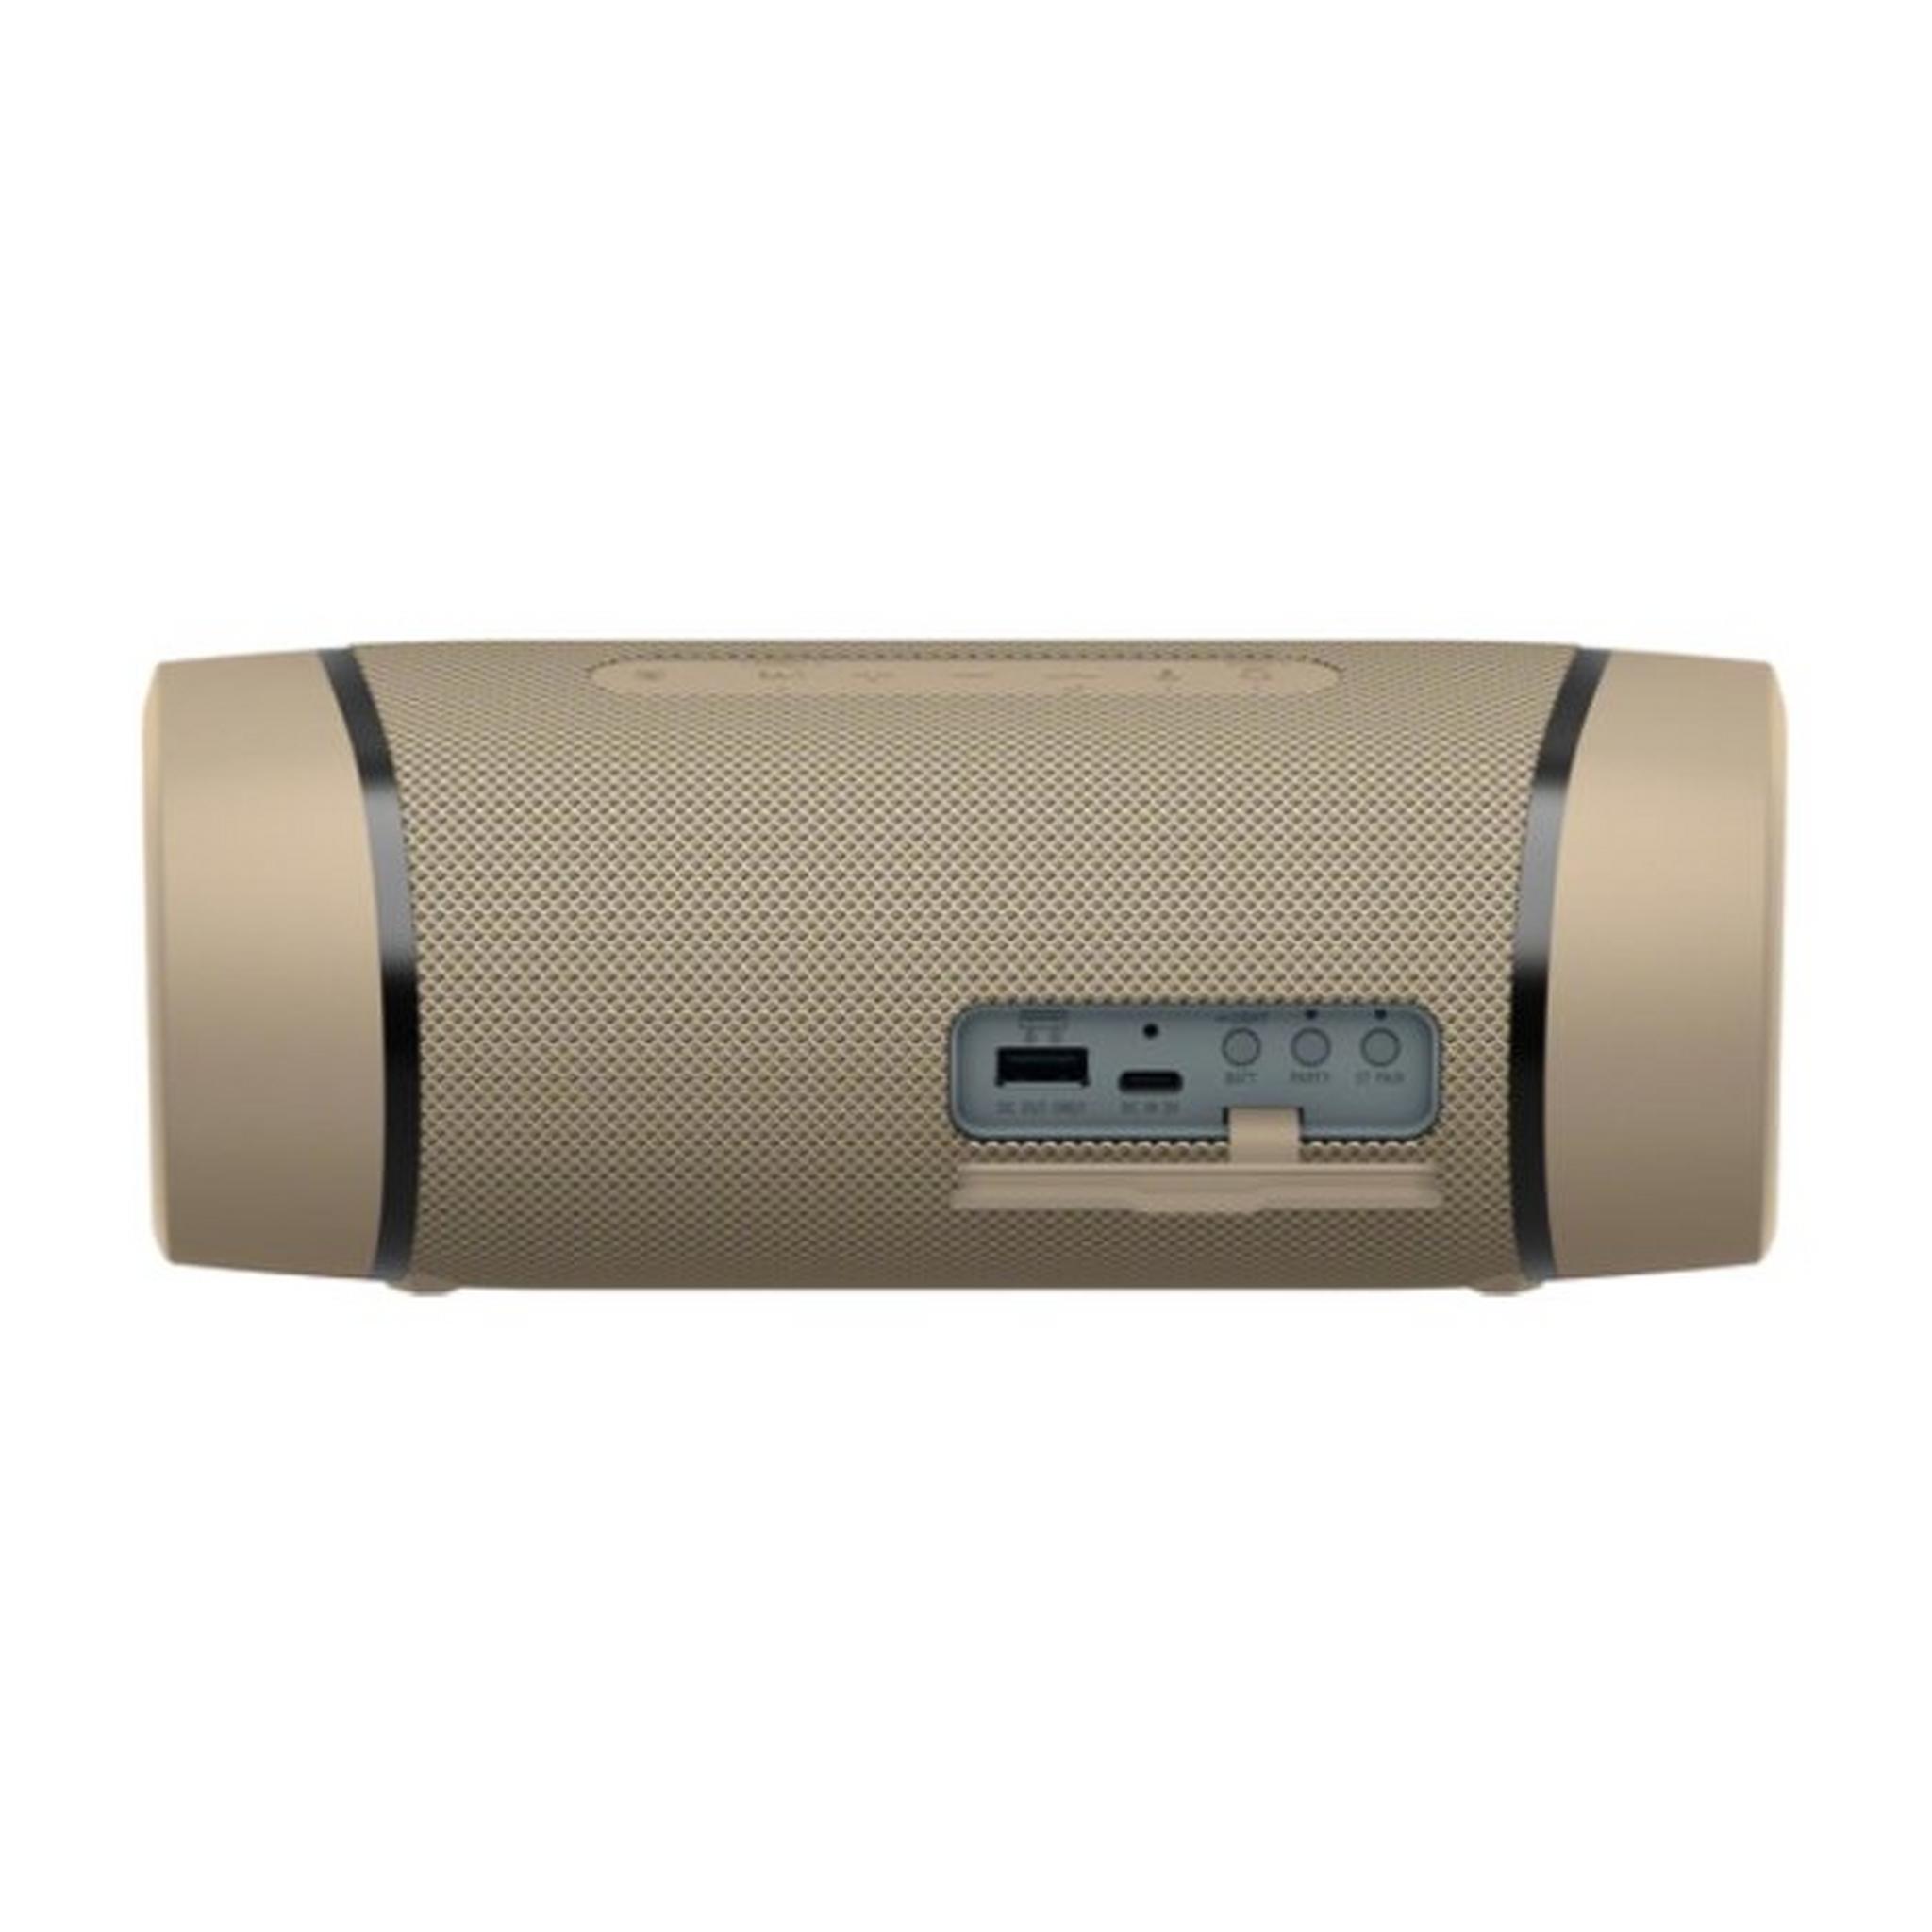 Sony Extra Bass Portable Wireless Speaker - Taupe Beige (SRS-XB33/C)